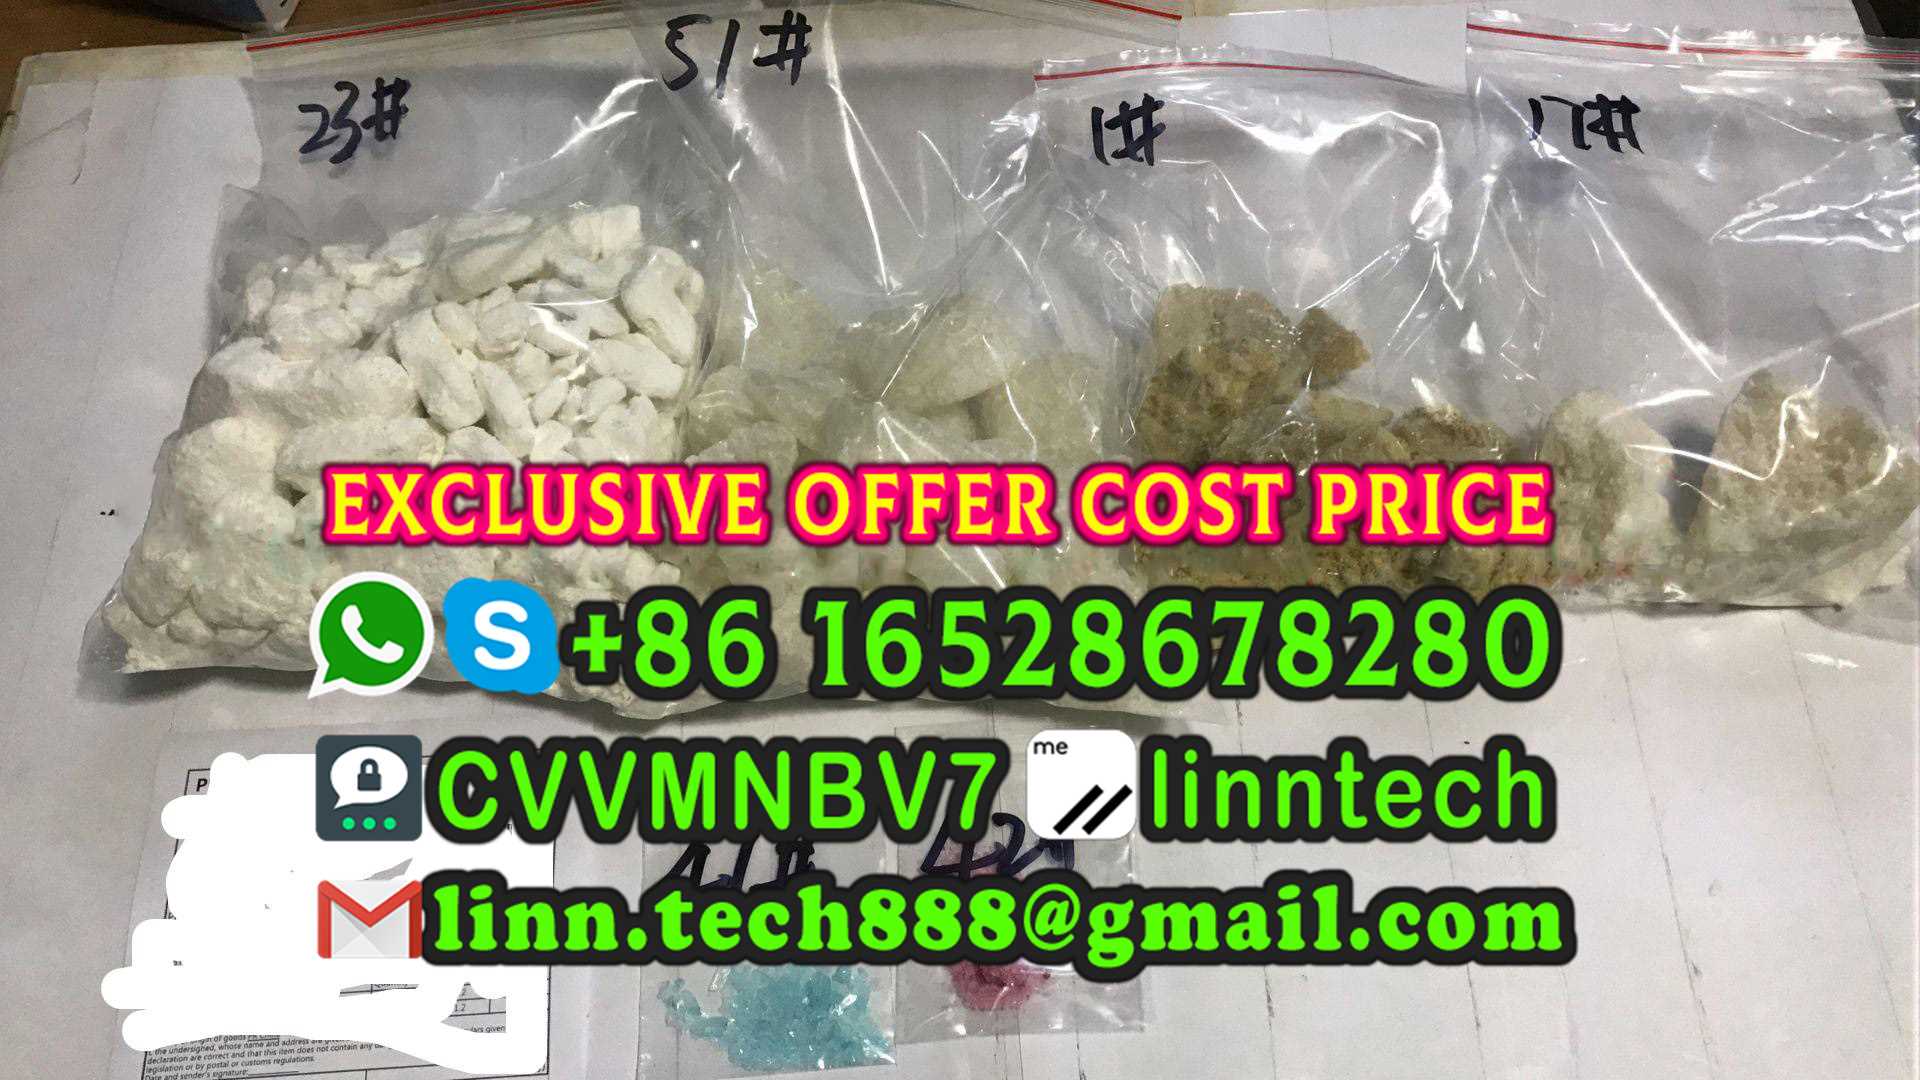 Buy Metonitazene Etonitazene Xylazine Analgesia Protonotazene powder 100%